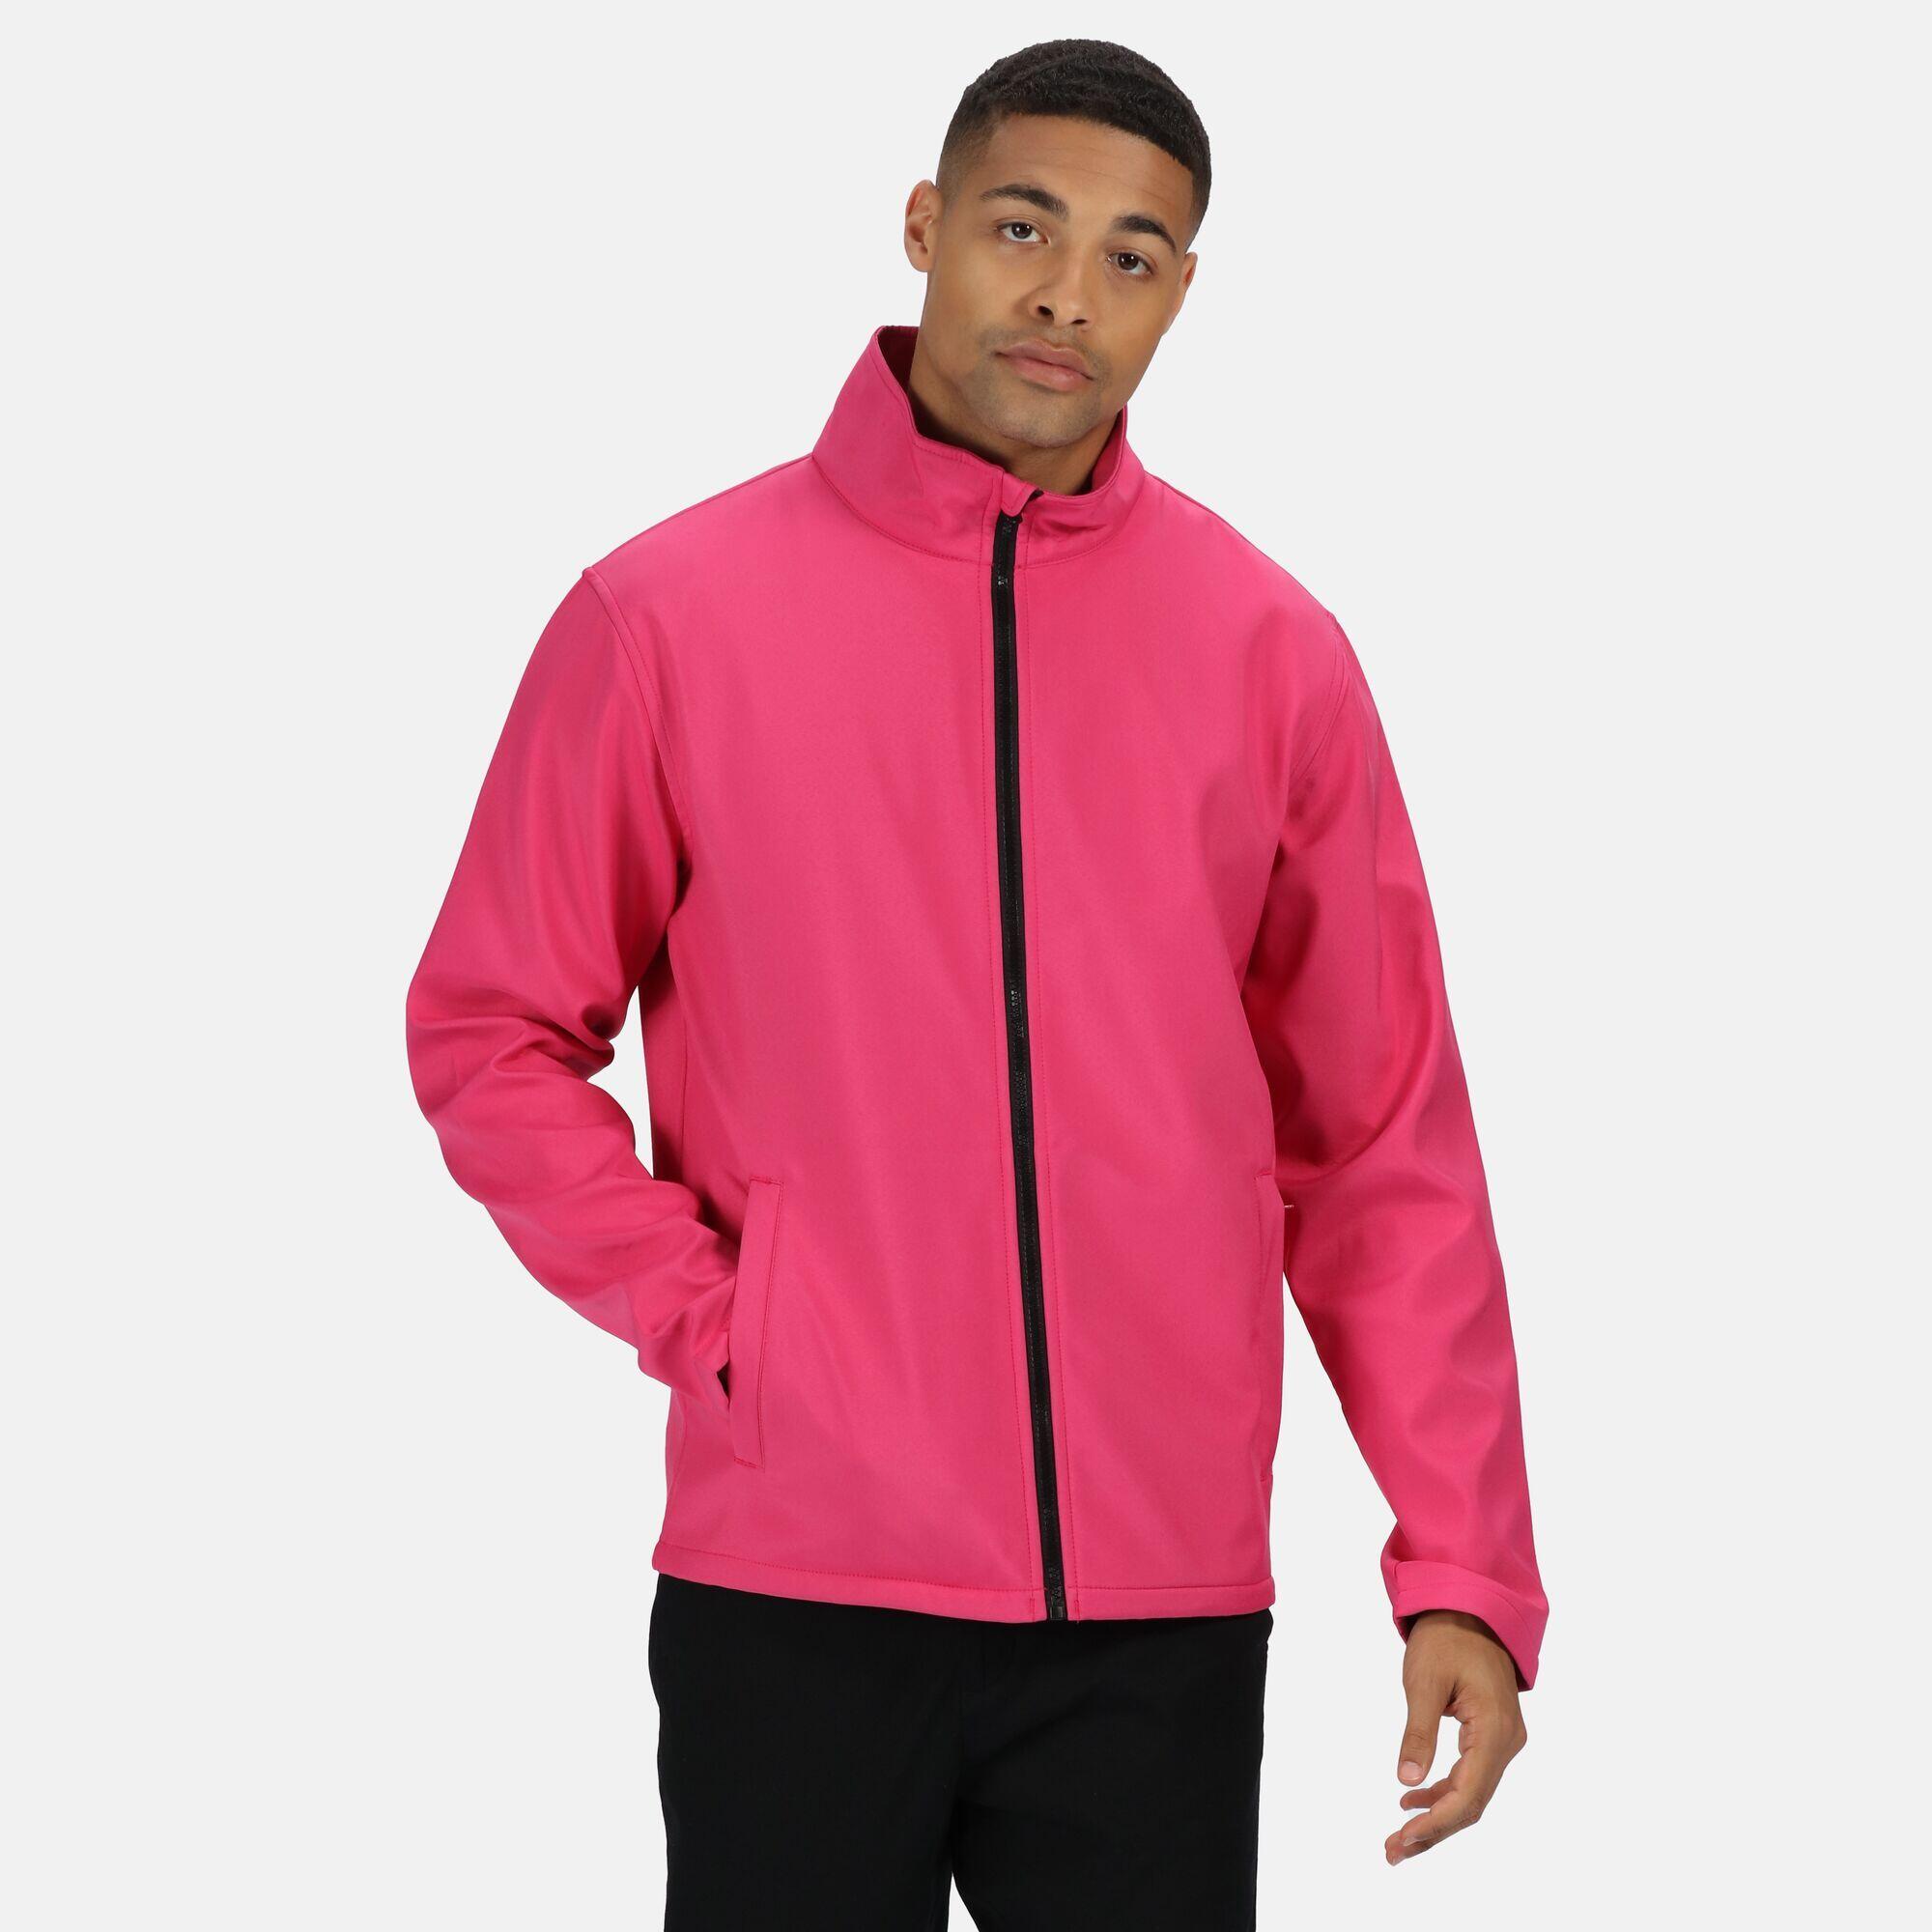 Standout Mens Ablaze Printable Soft Shell Jacket (Hot Pink/Black) 4/5